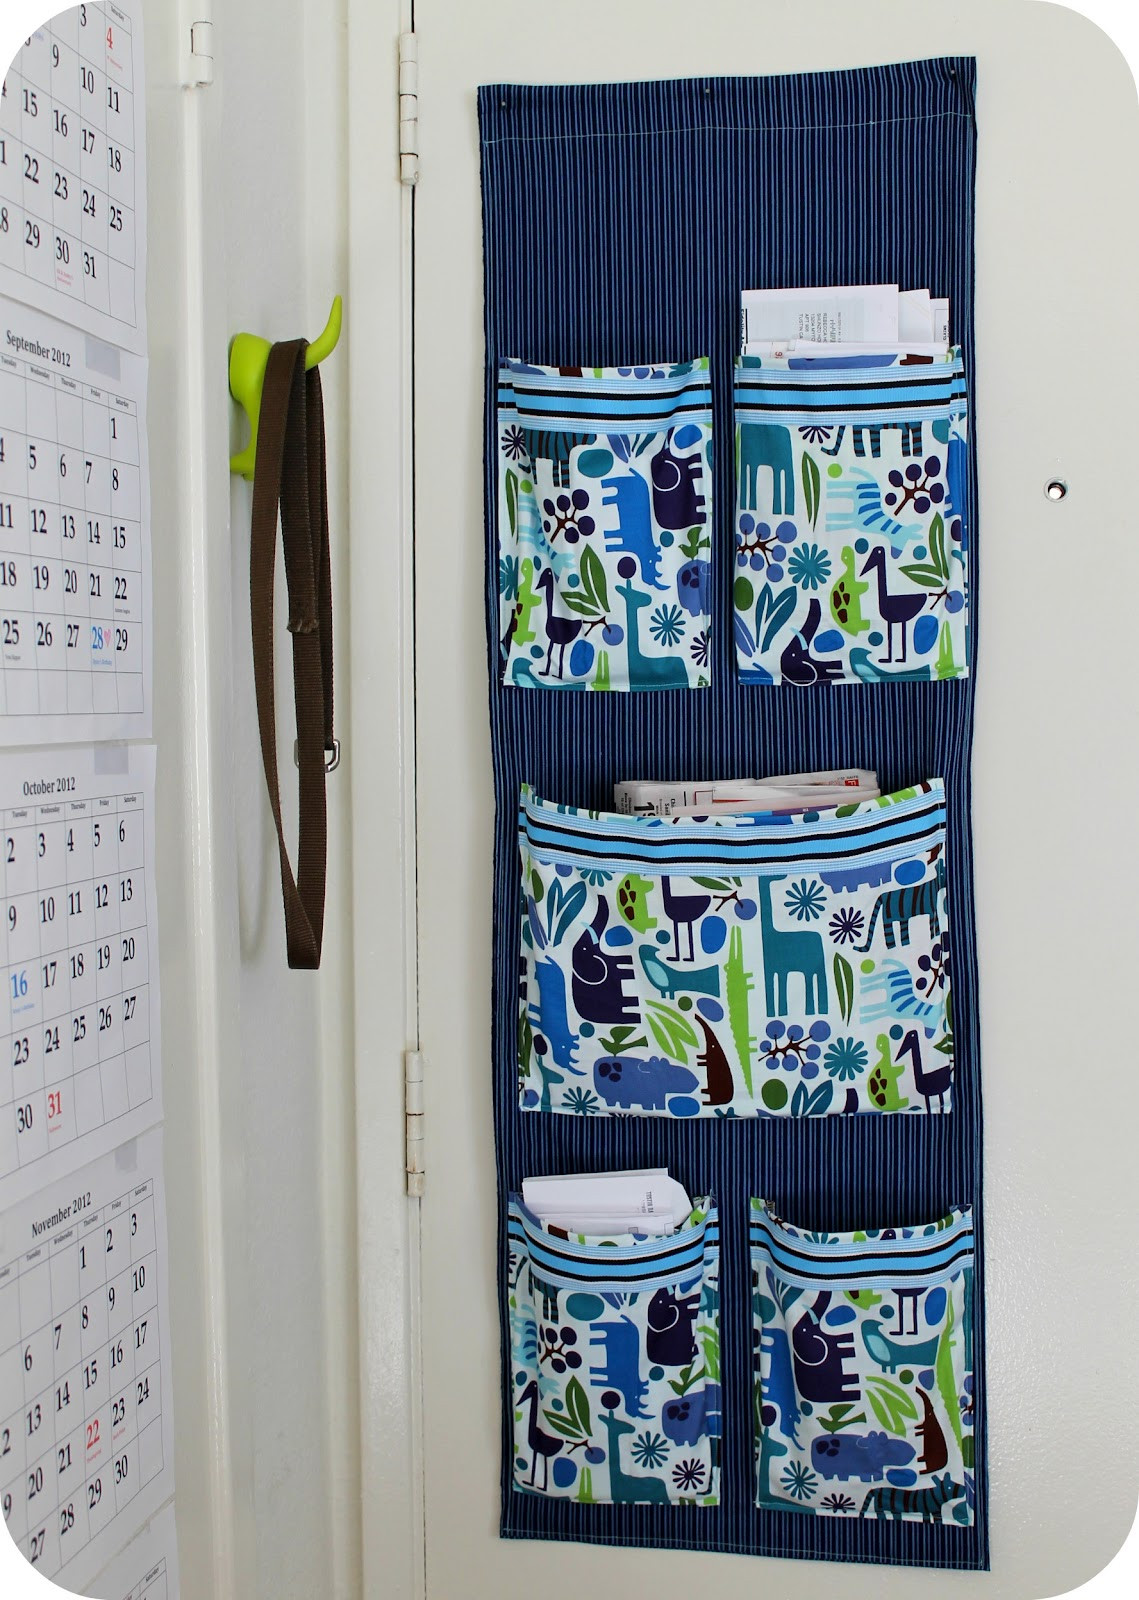 DIY Wall Organizer
 DiY Project Sew a Fabric Mail Organizer for the Wall